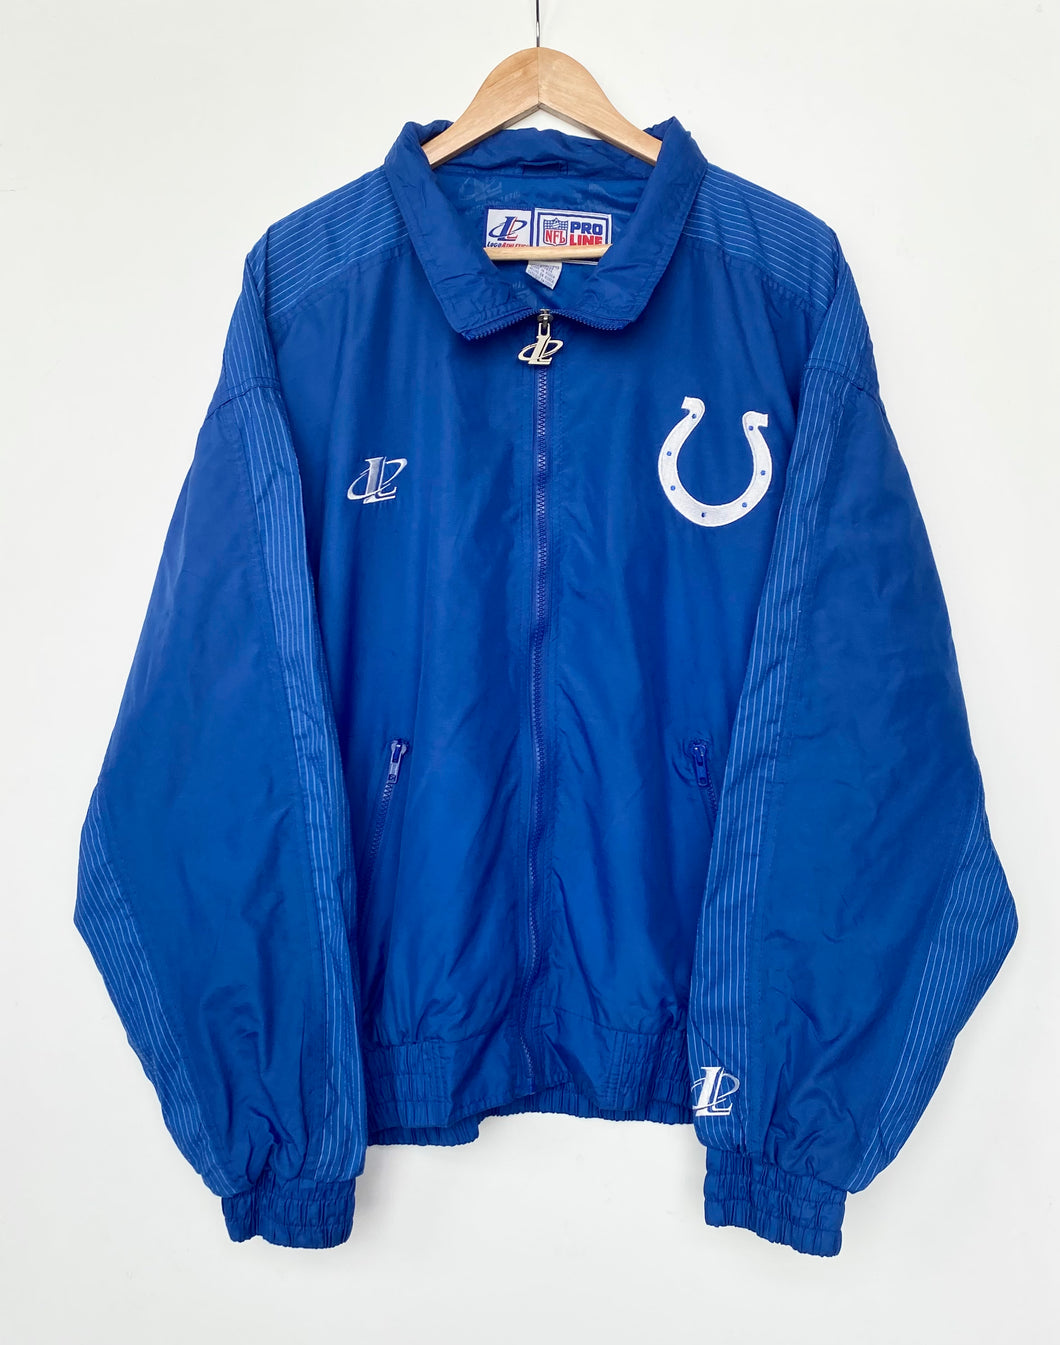 NFL Indianapolis Colts jacket (XL)